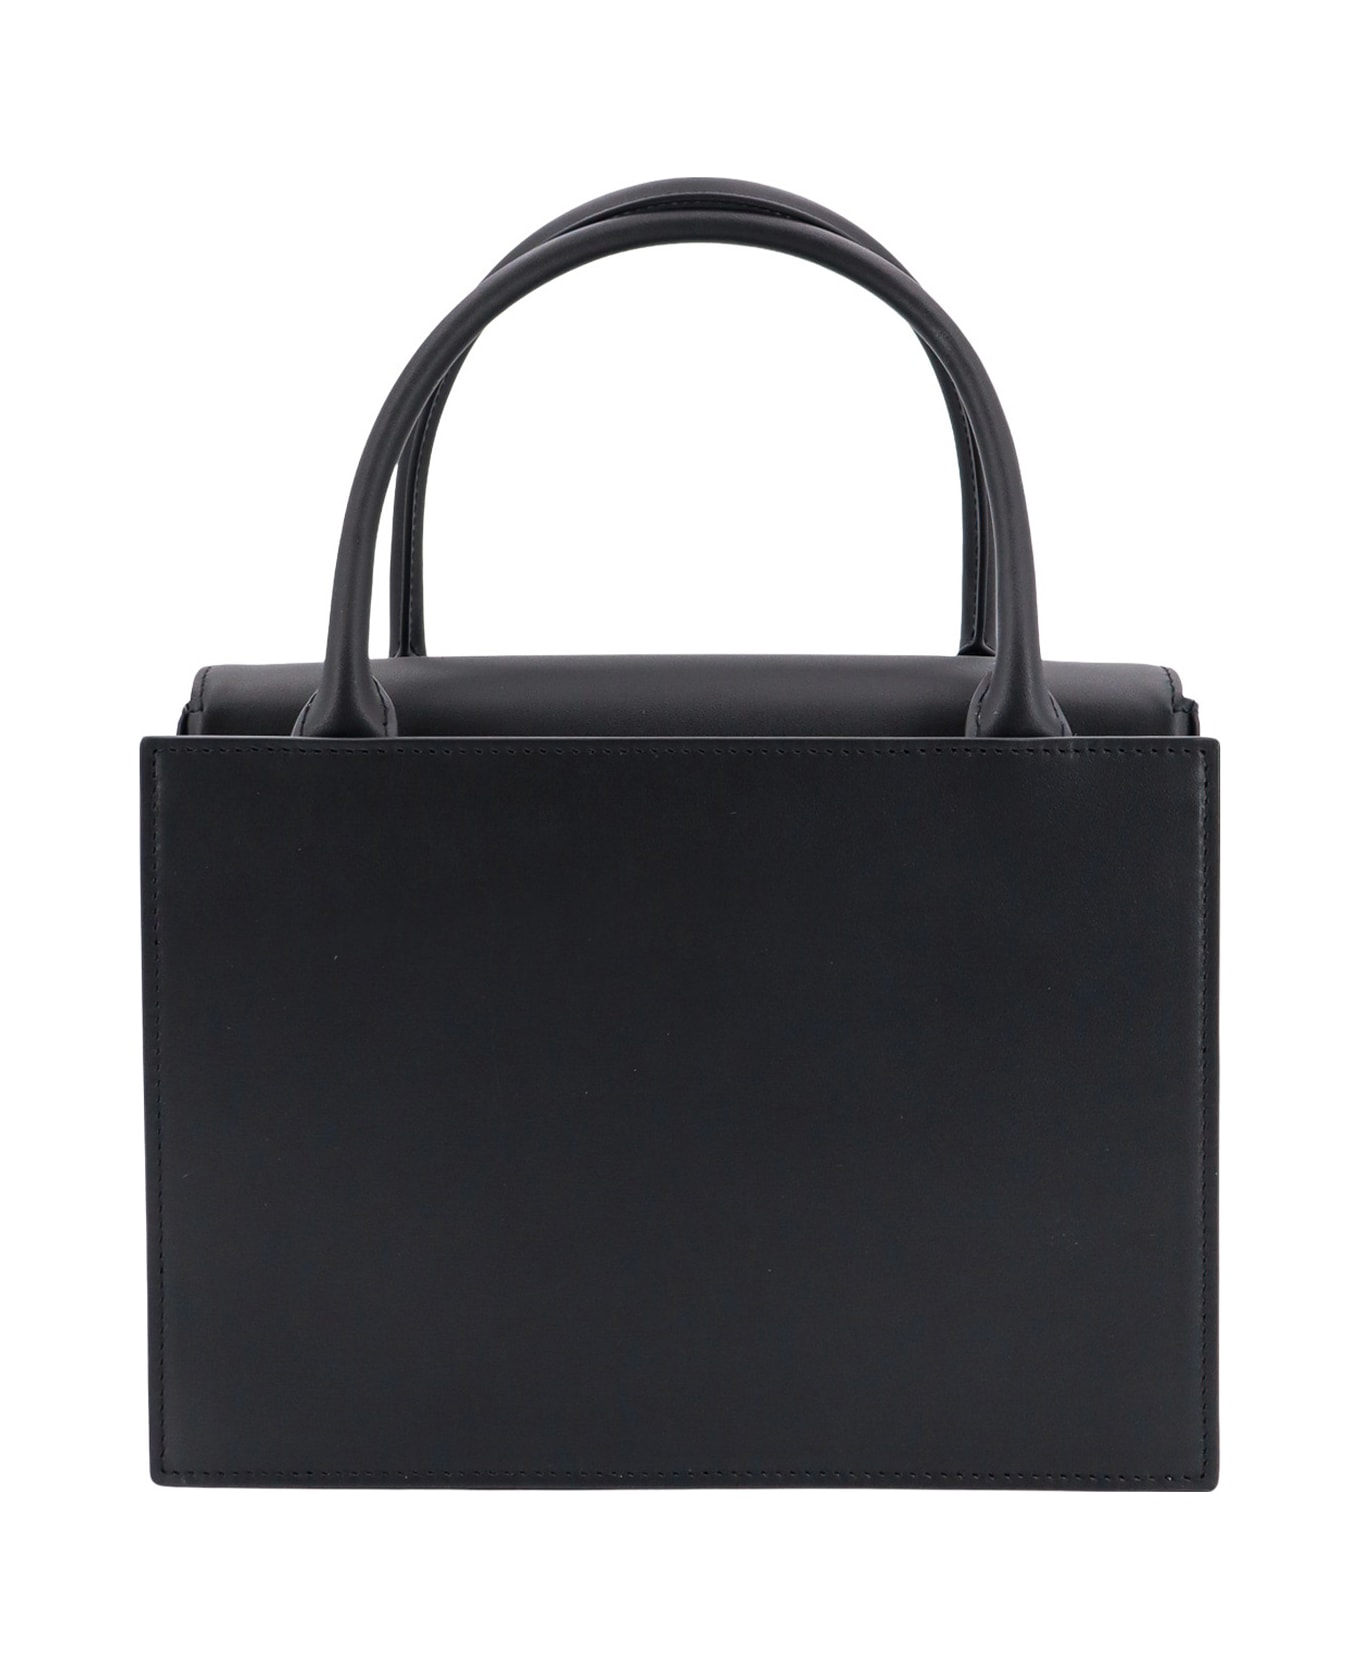 Dolce & Gabbana Handbag - Black